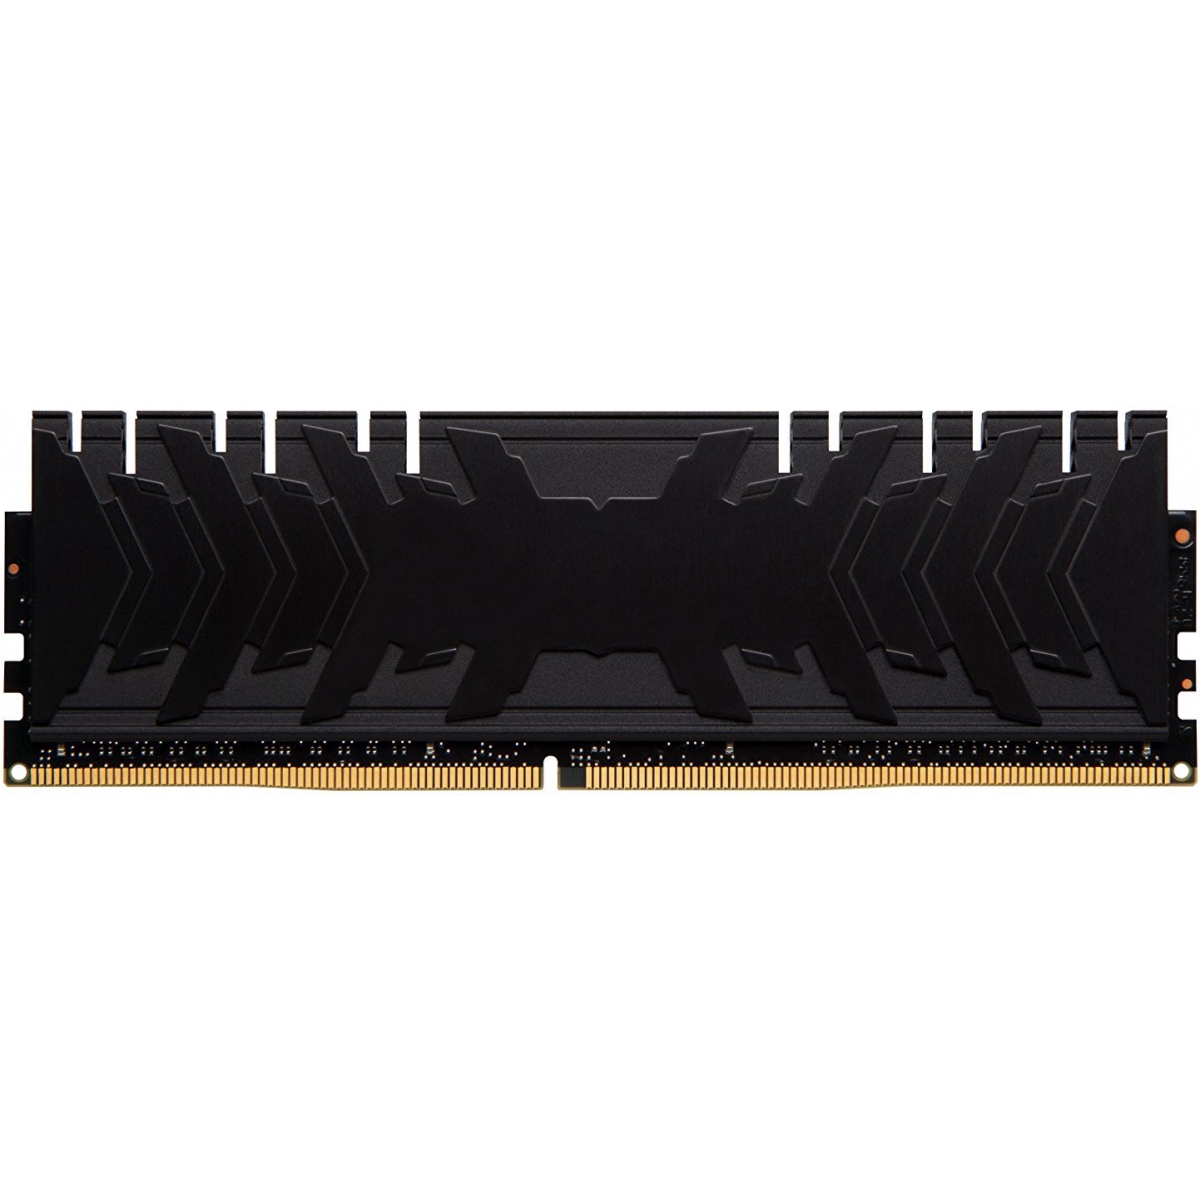 Memória DDR4 Kingston HyperX Predator, 8GB 2400MHZ, HX424C12PB3/8